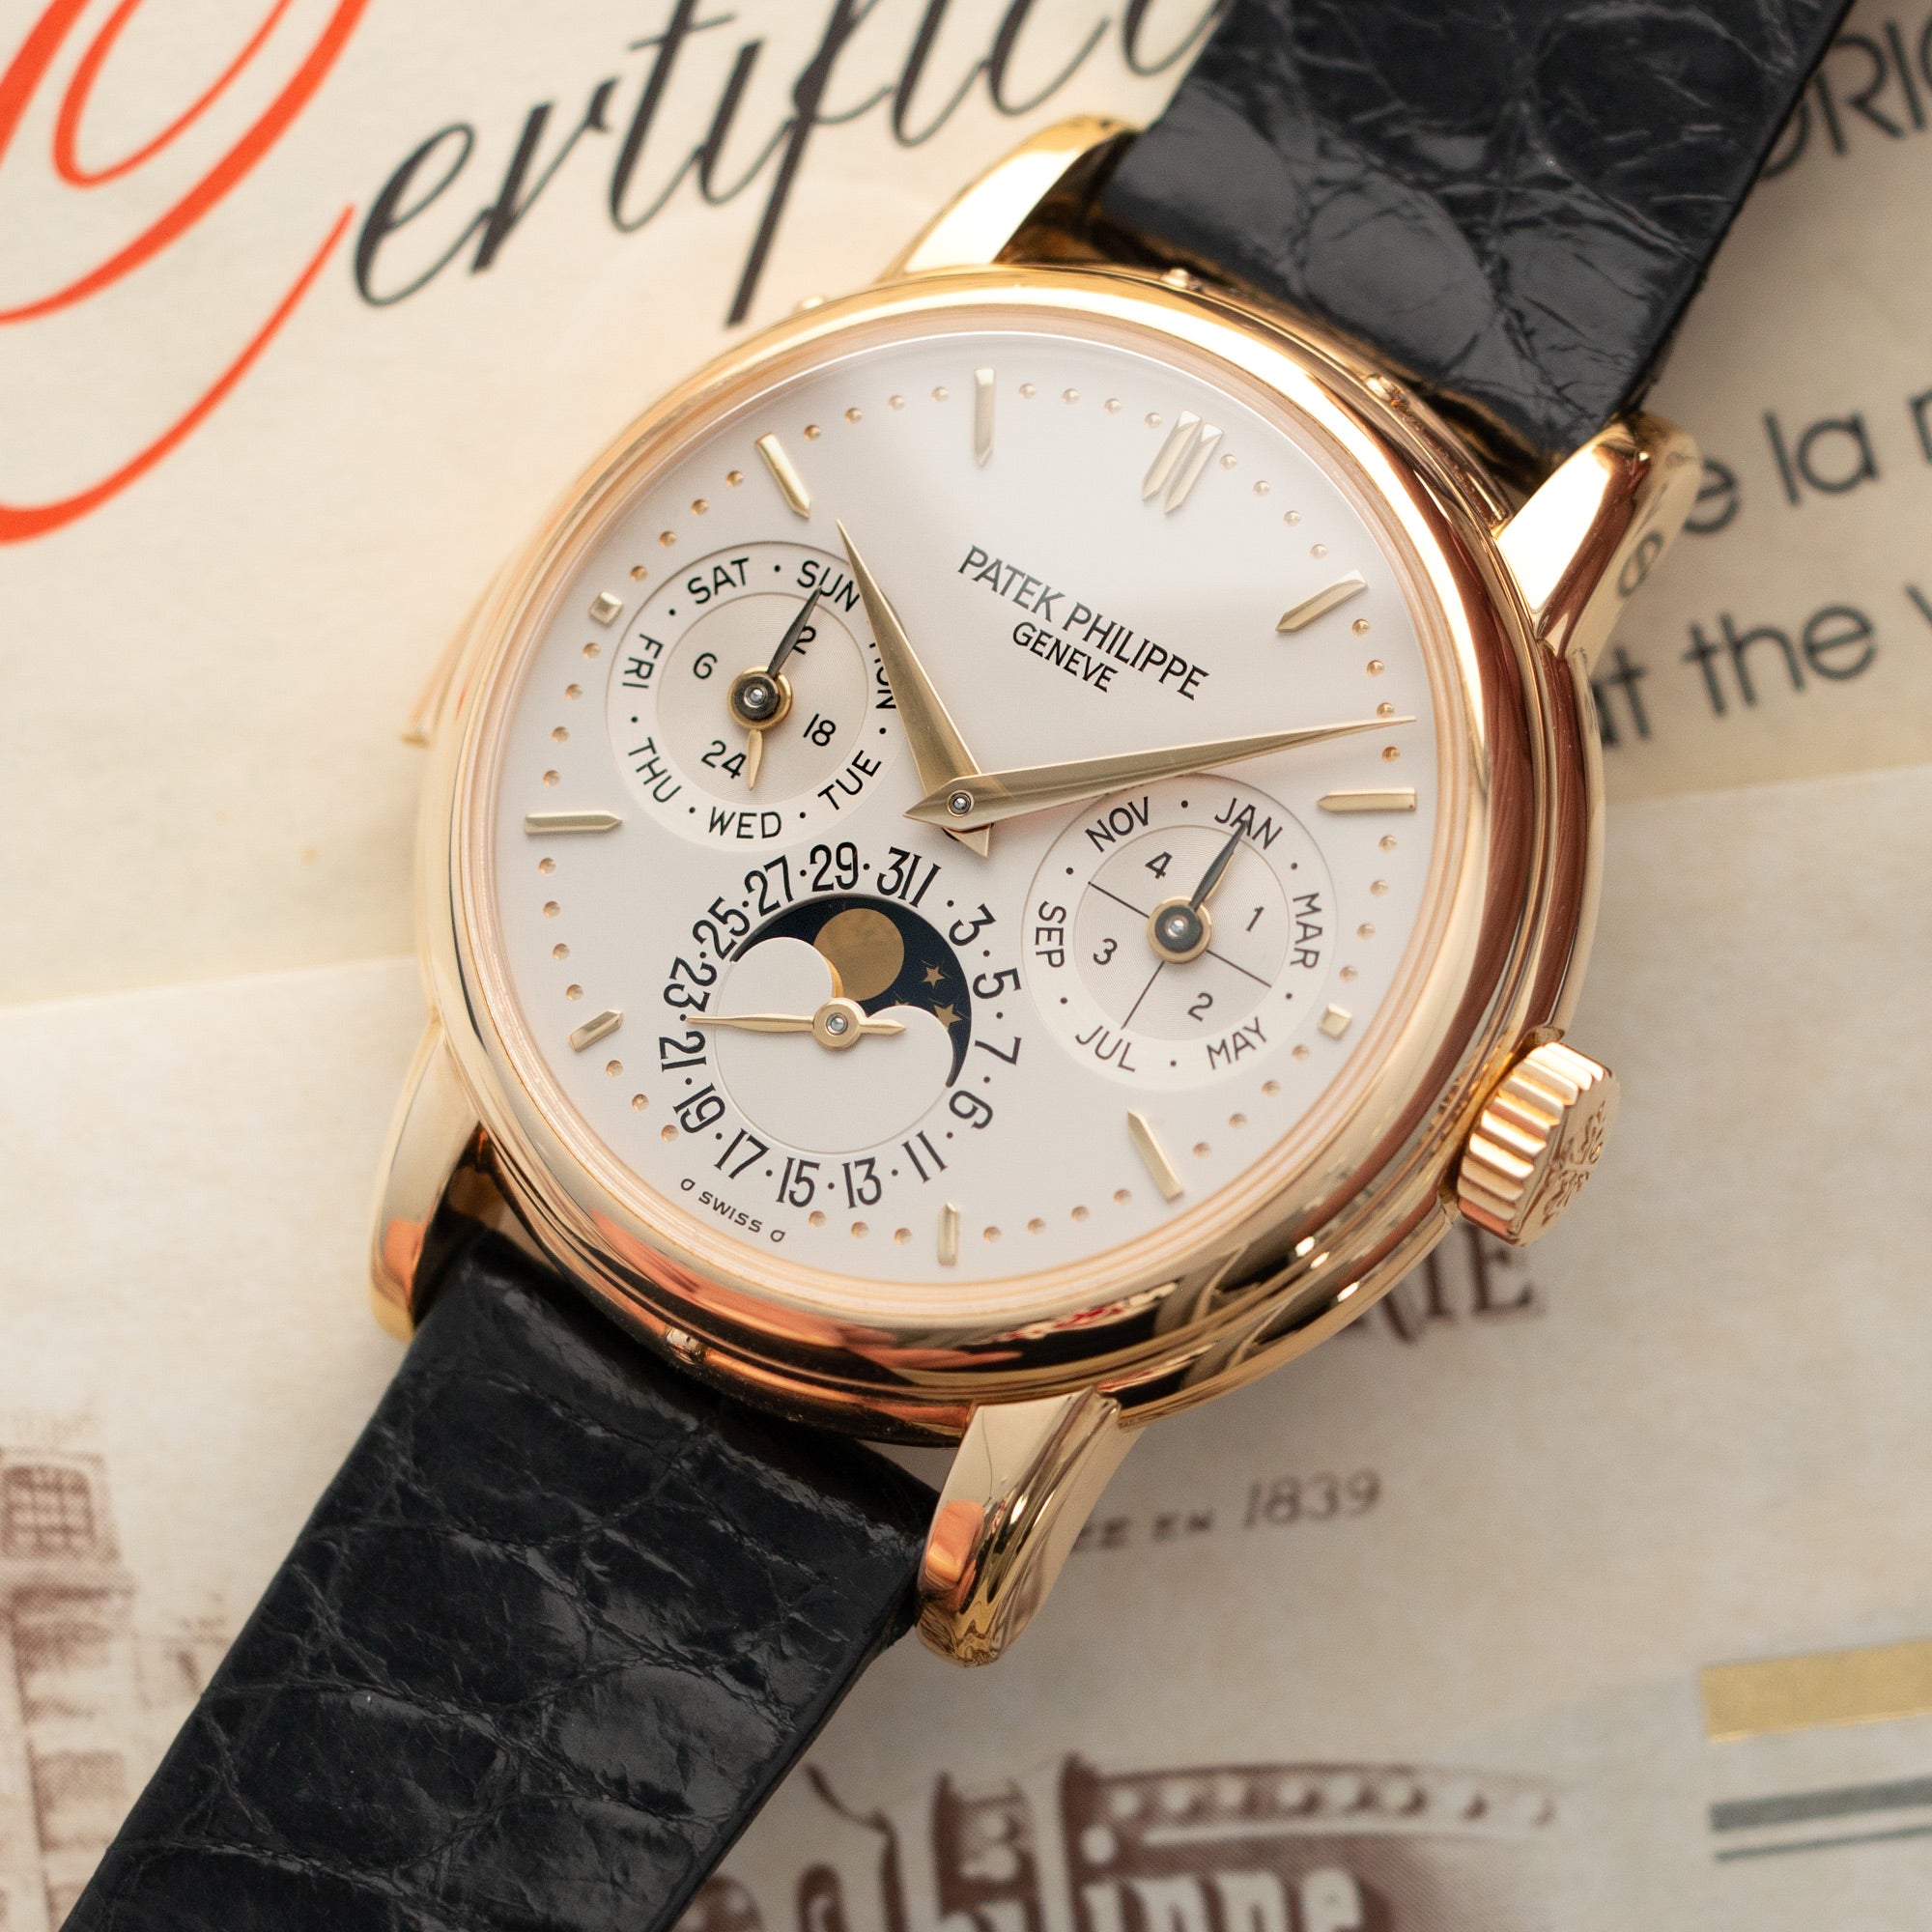 Patek Philippe - Patek Philippe Yellow Gold Minute Repeater Perpetual Calendar Ref. 3974 - The Keystone Watches